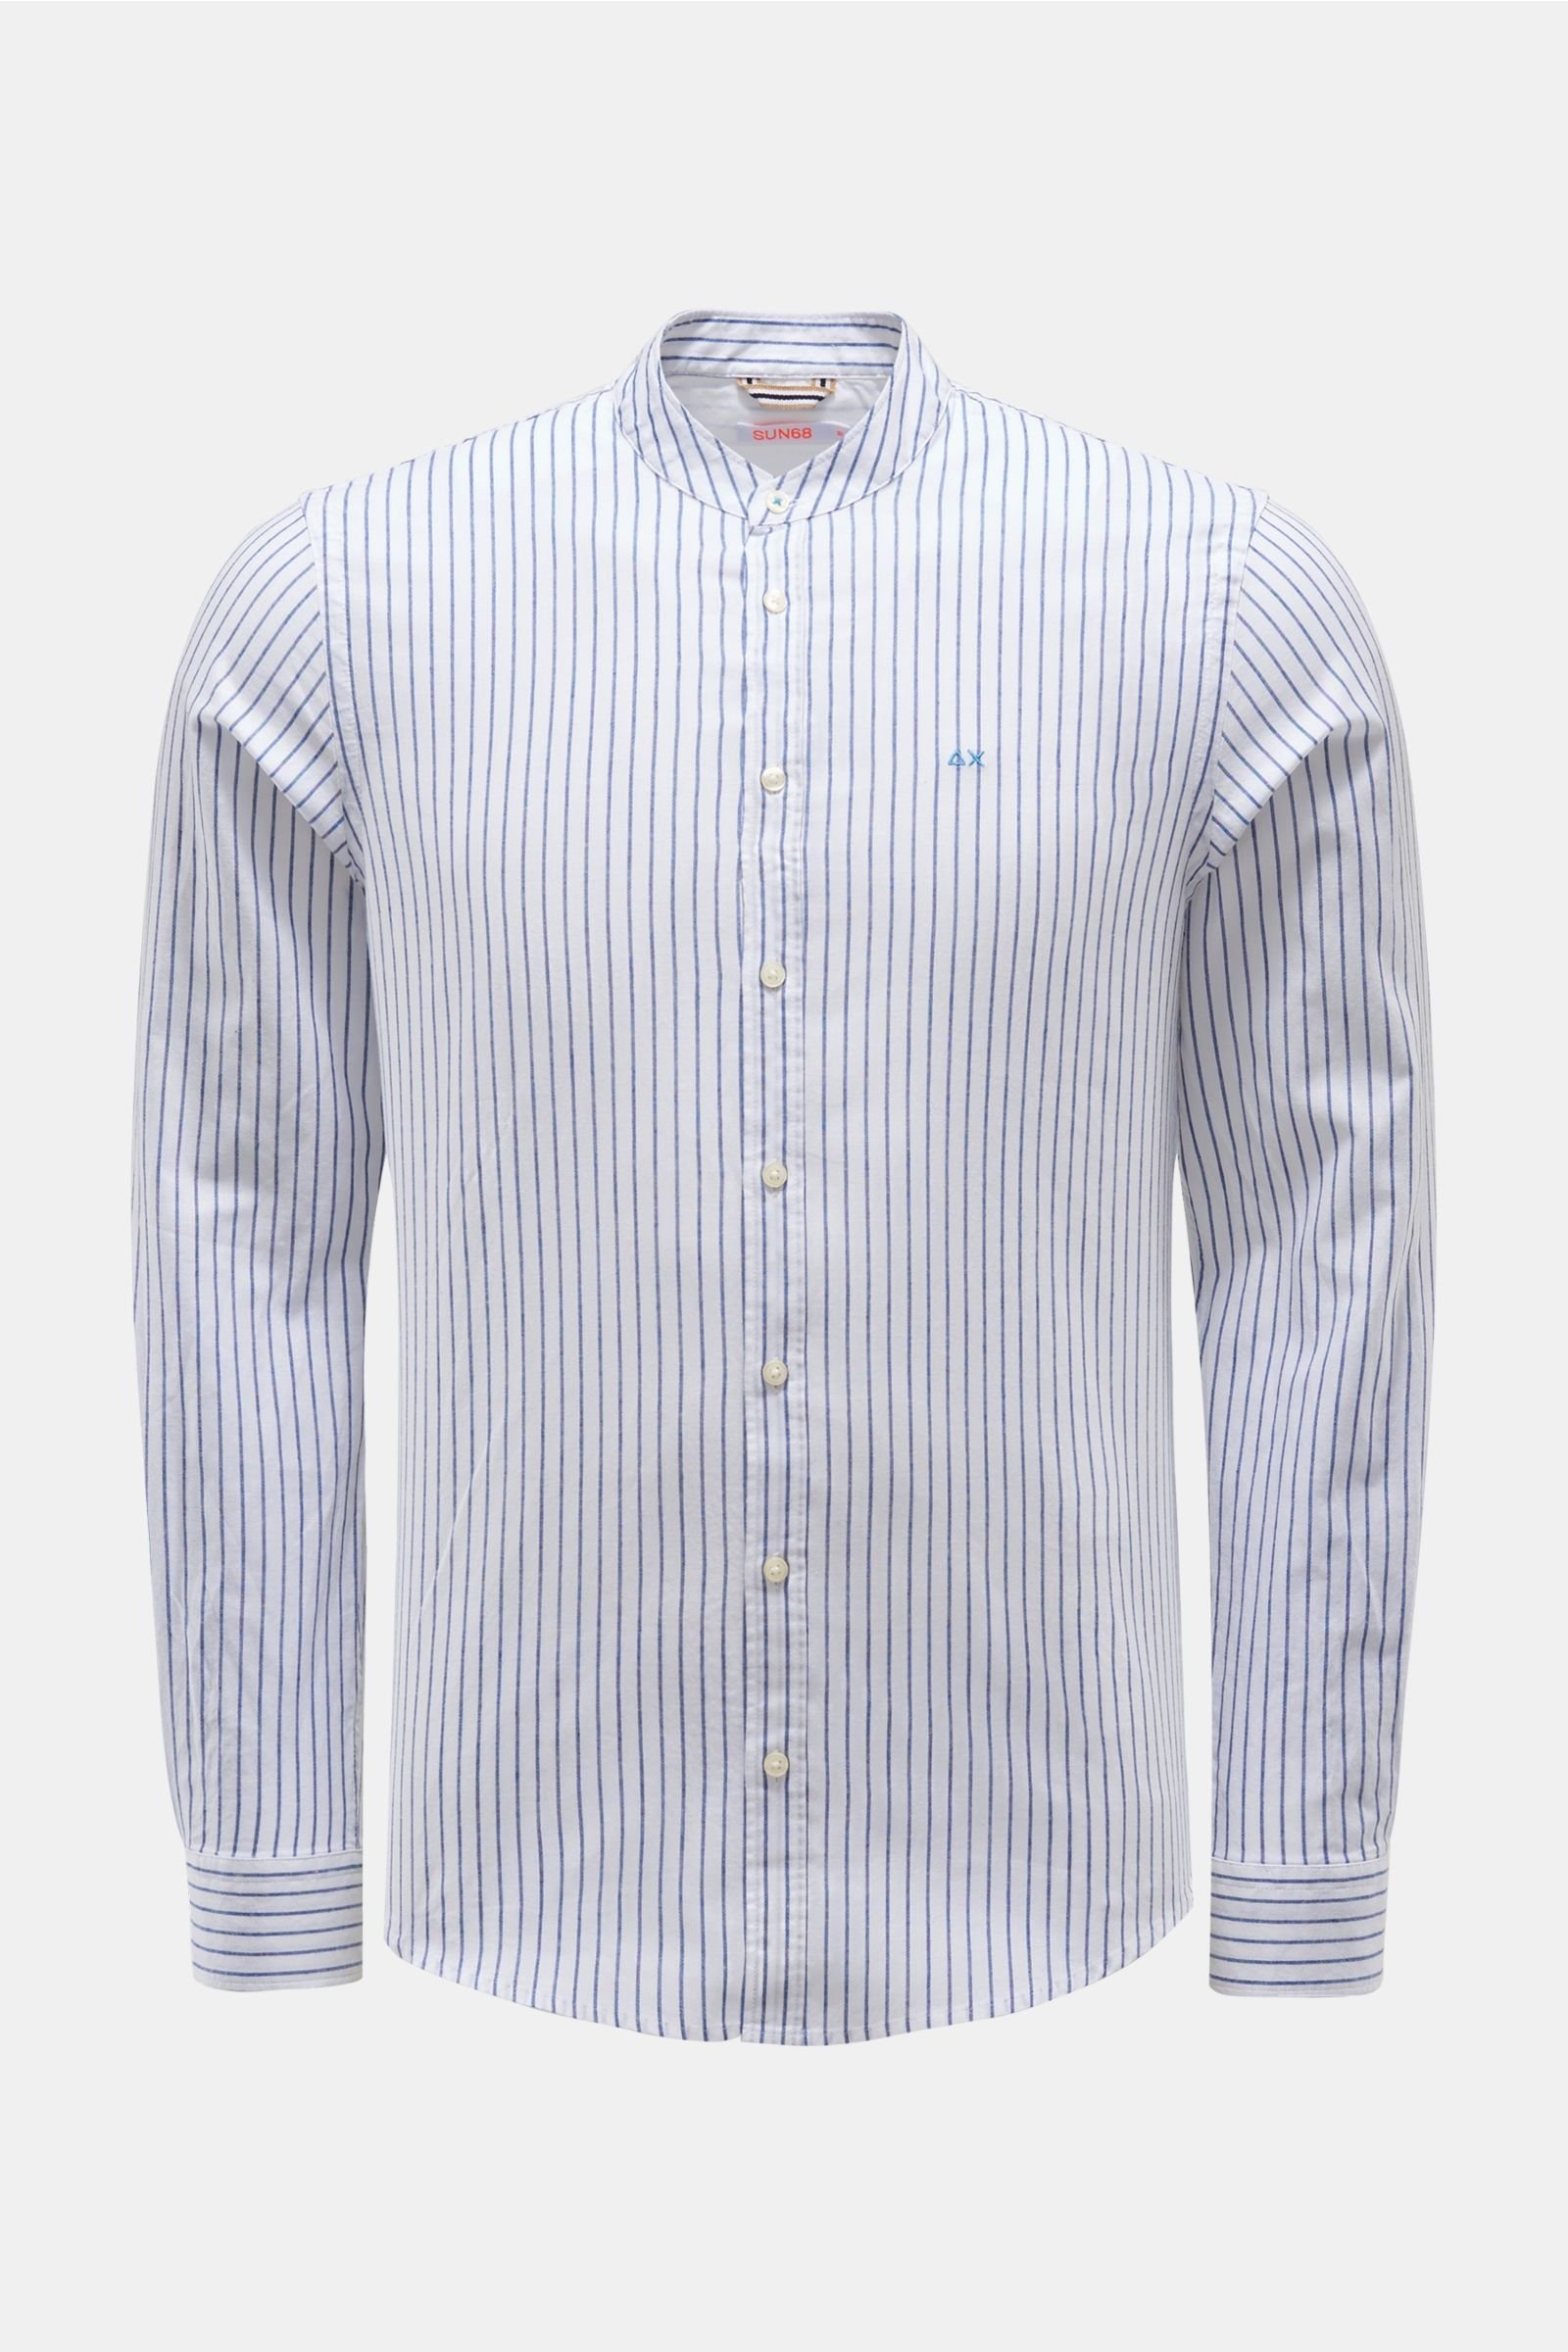 Casual shirt grandad-collar white/dark blue striped